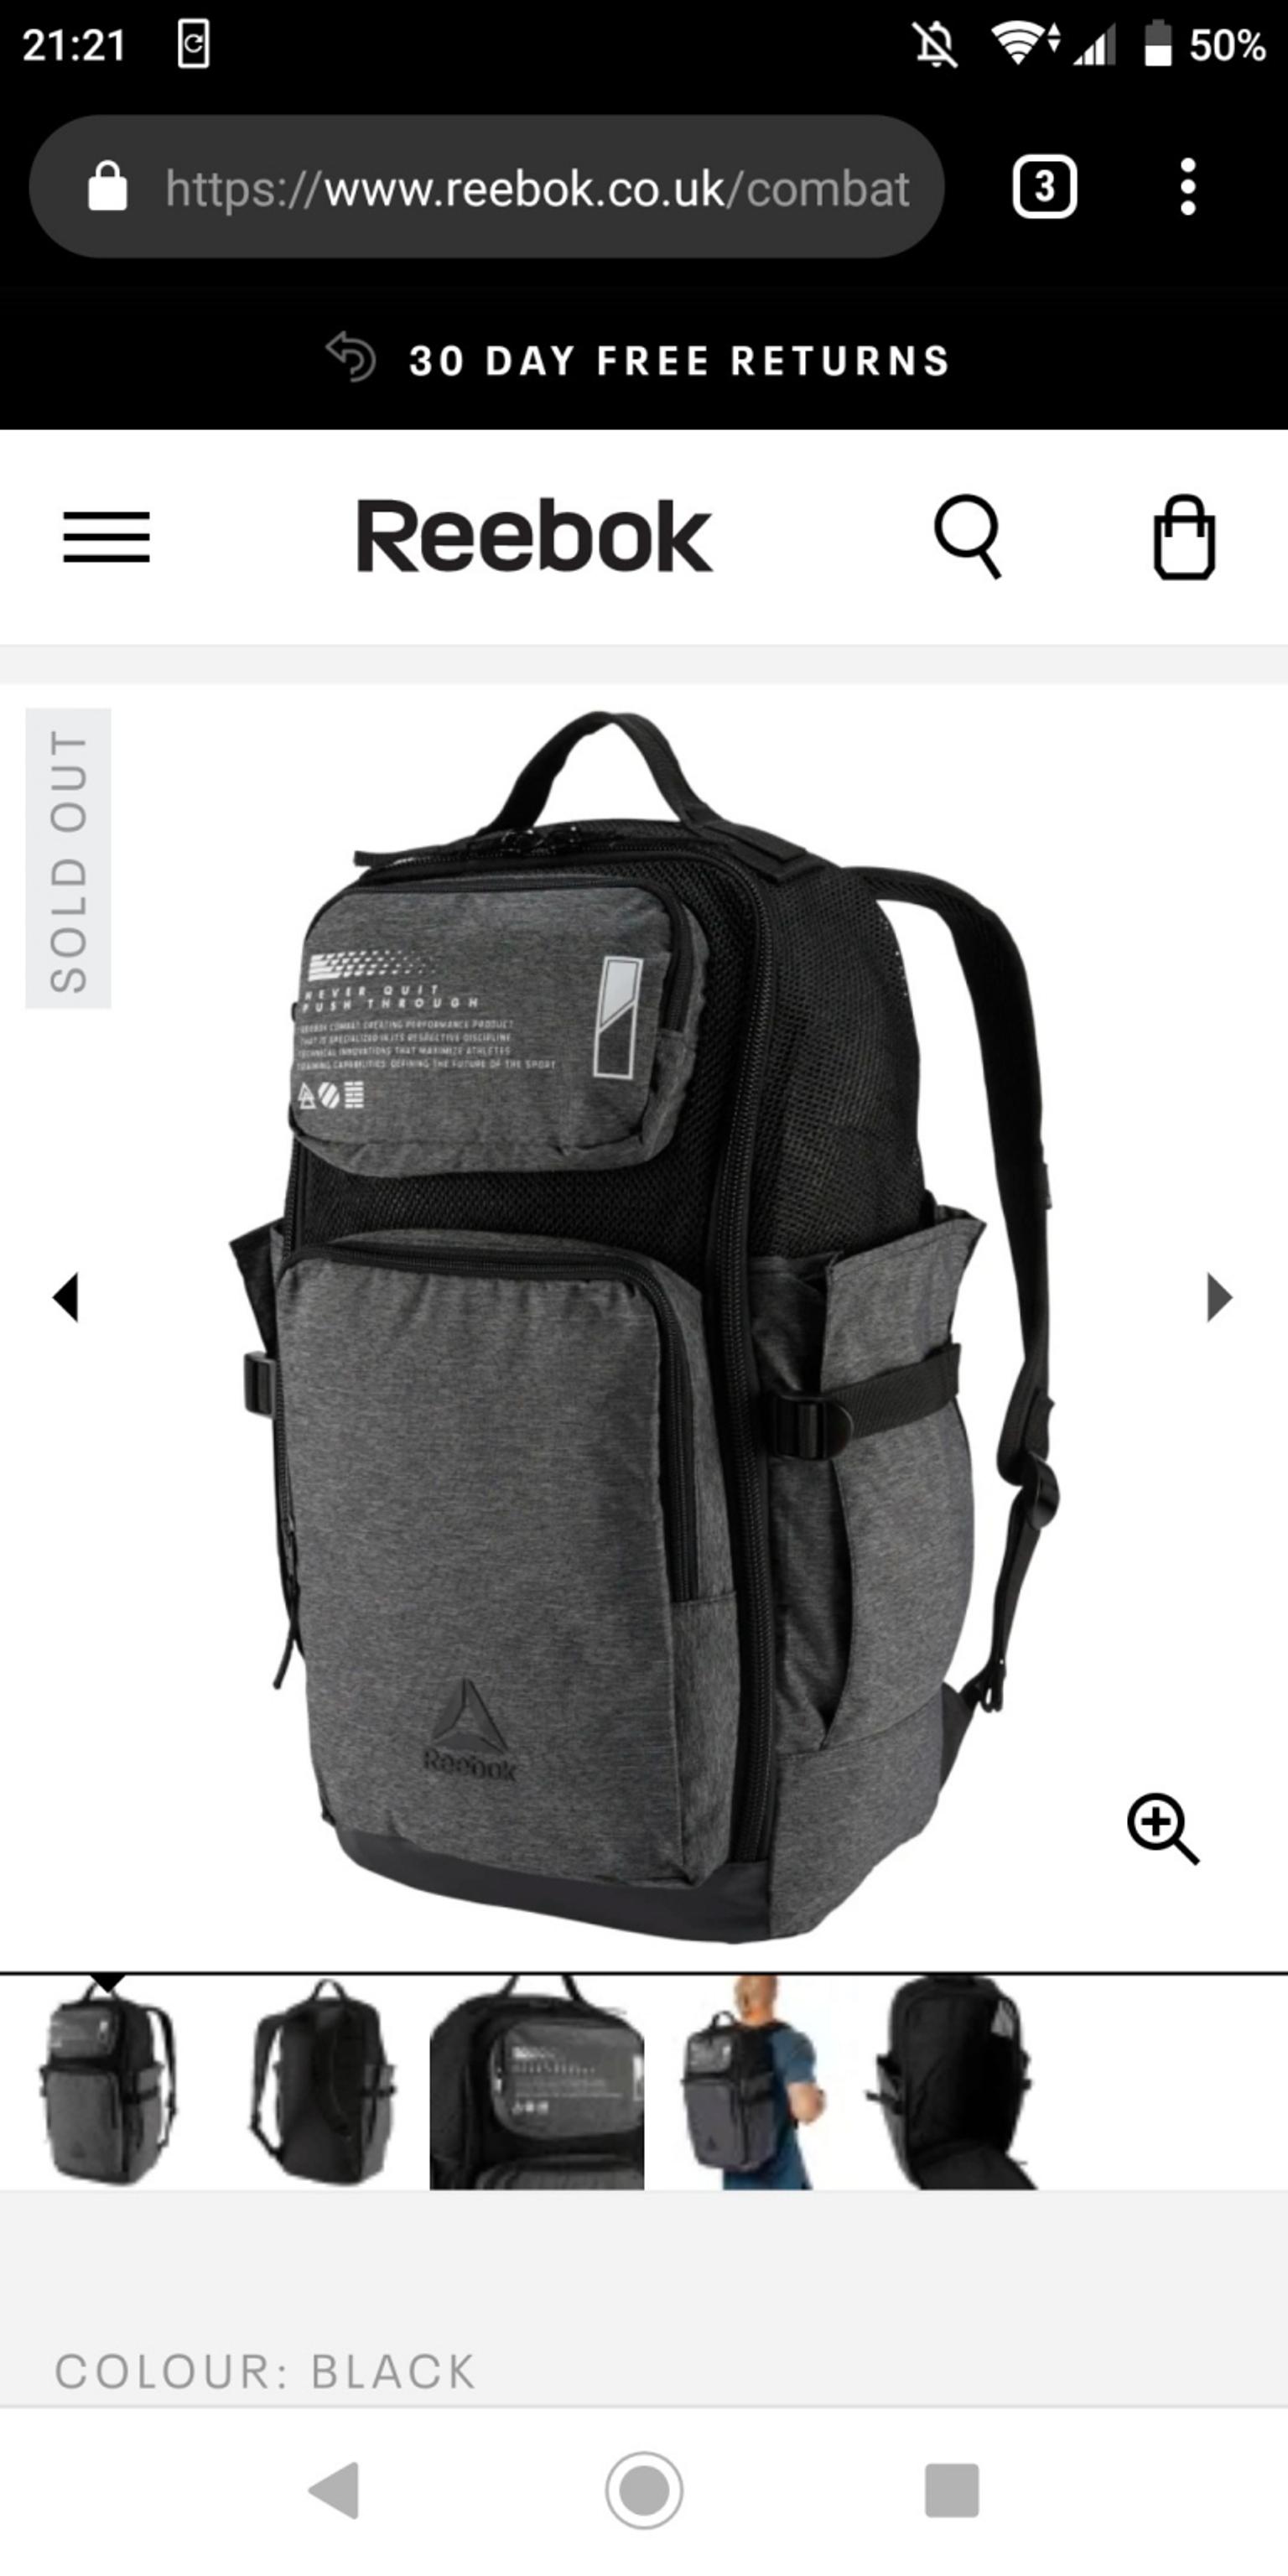 reebok combat backpack